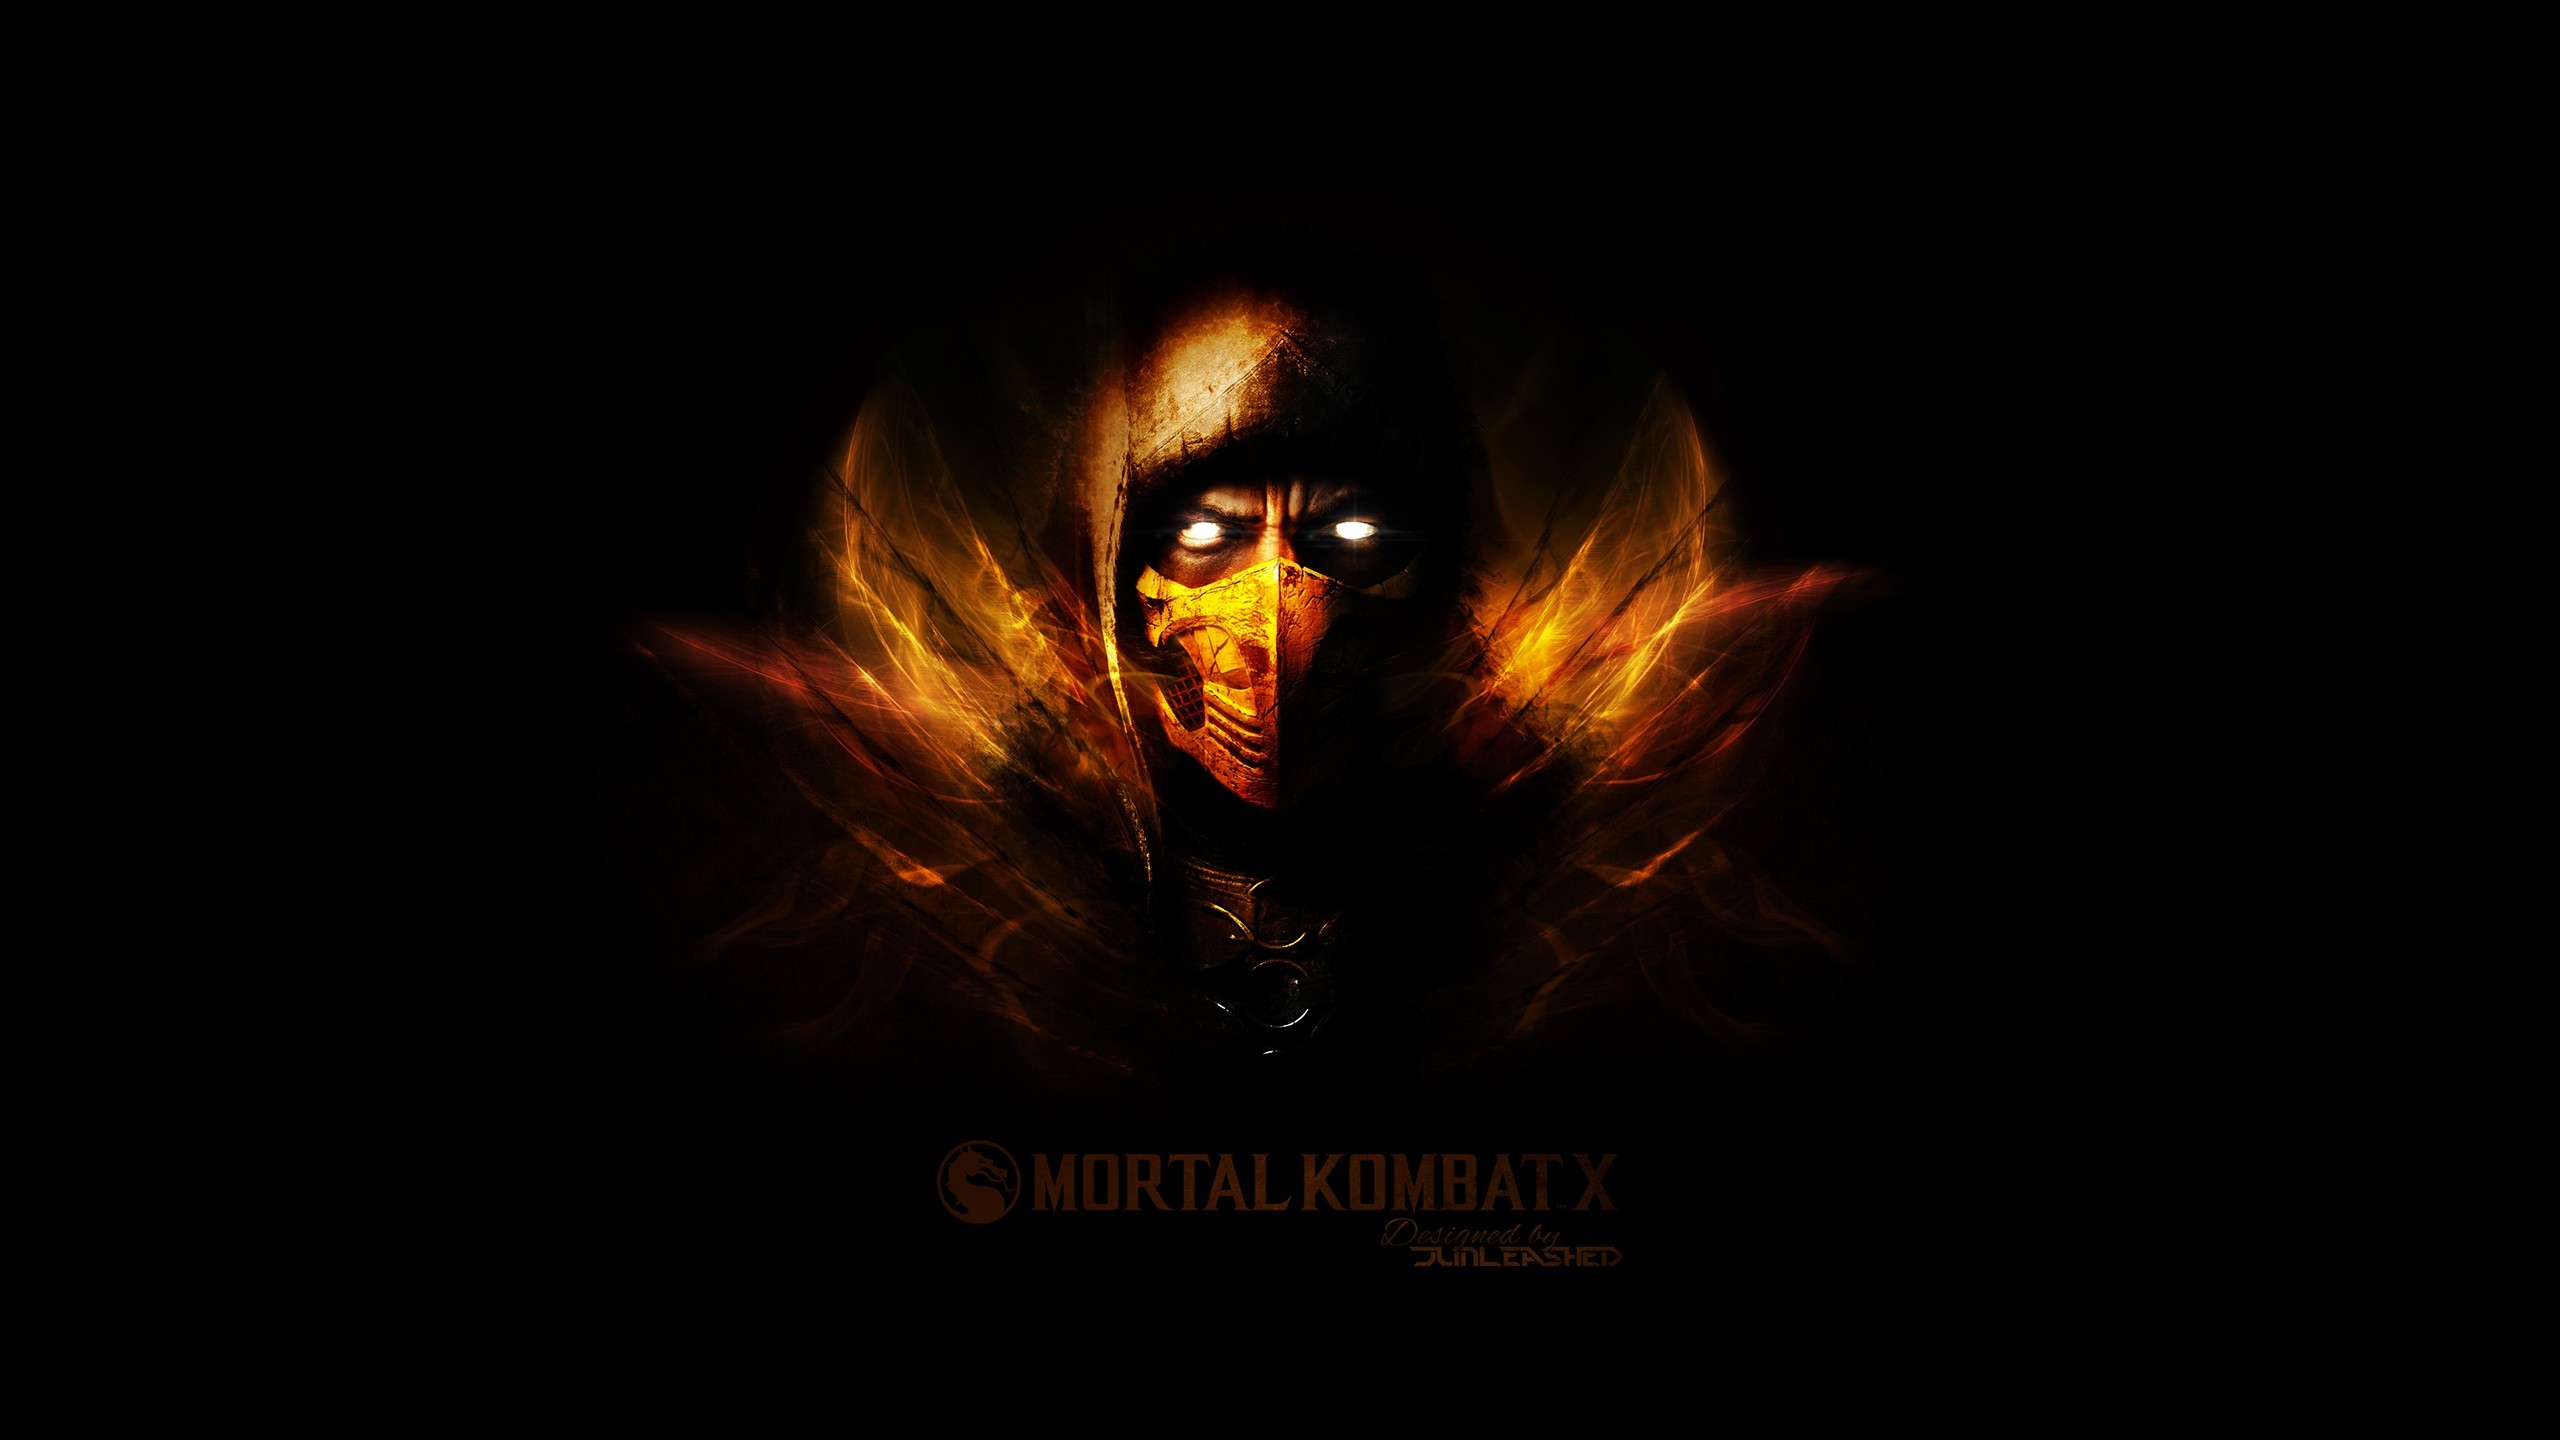 2560x1440 Mortal Kombat Sub-Zero artwork HD Wallpaper -  http://www.hdwallpaperuniverse.com/mortal-kombat-sub-zero-artwork-hd- wallpaper/ | Pinterest | Mortal kombat, ...